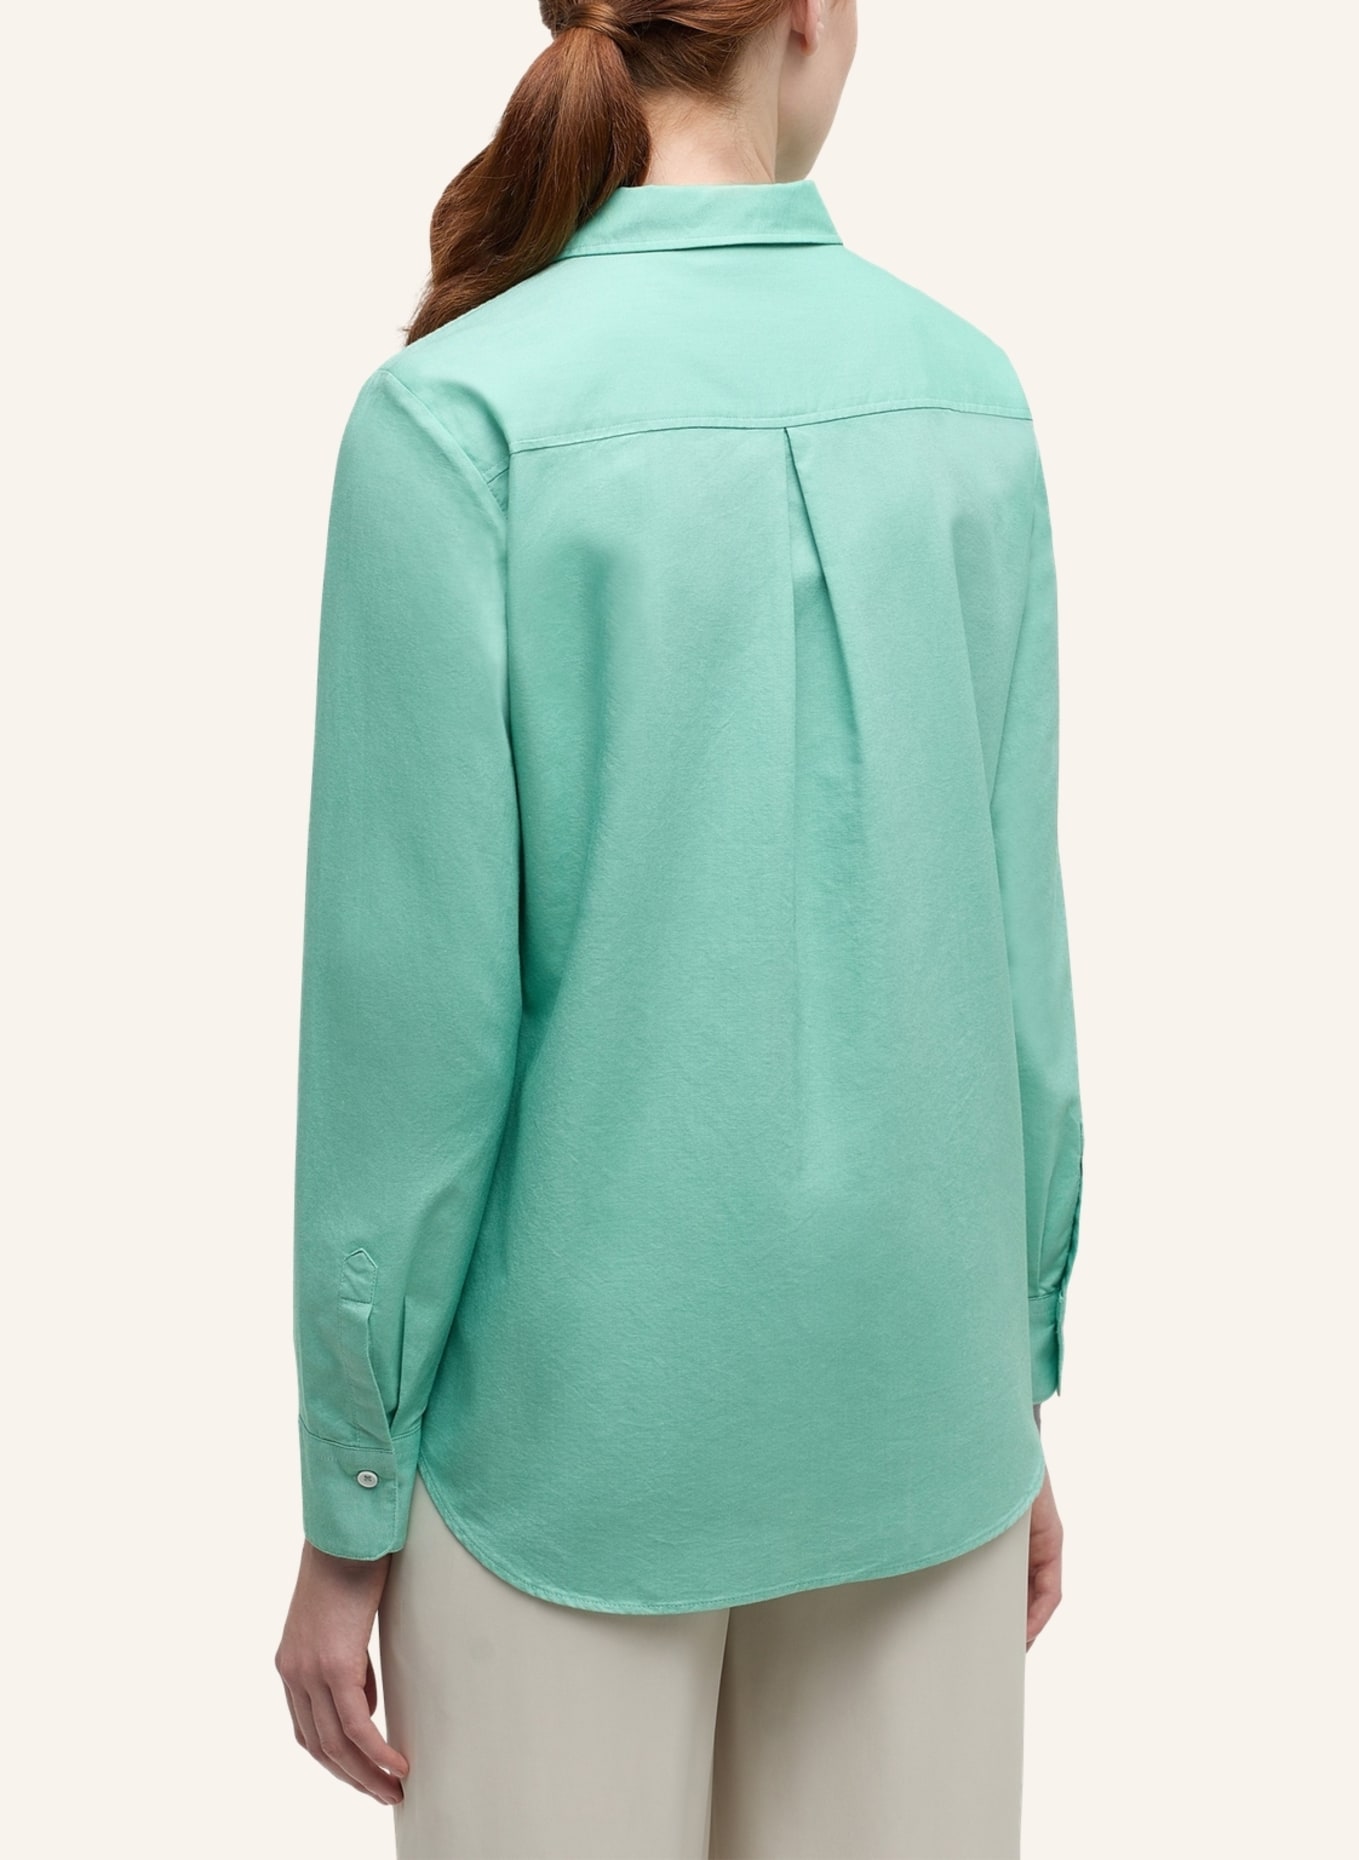 ETERNA Bluse FIT grün REGULAR in